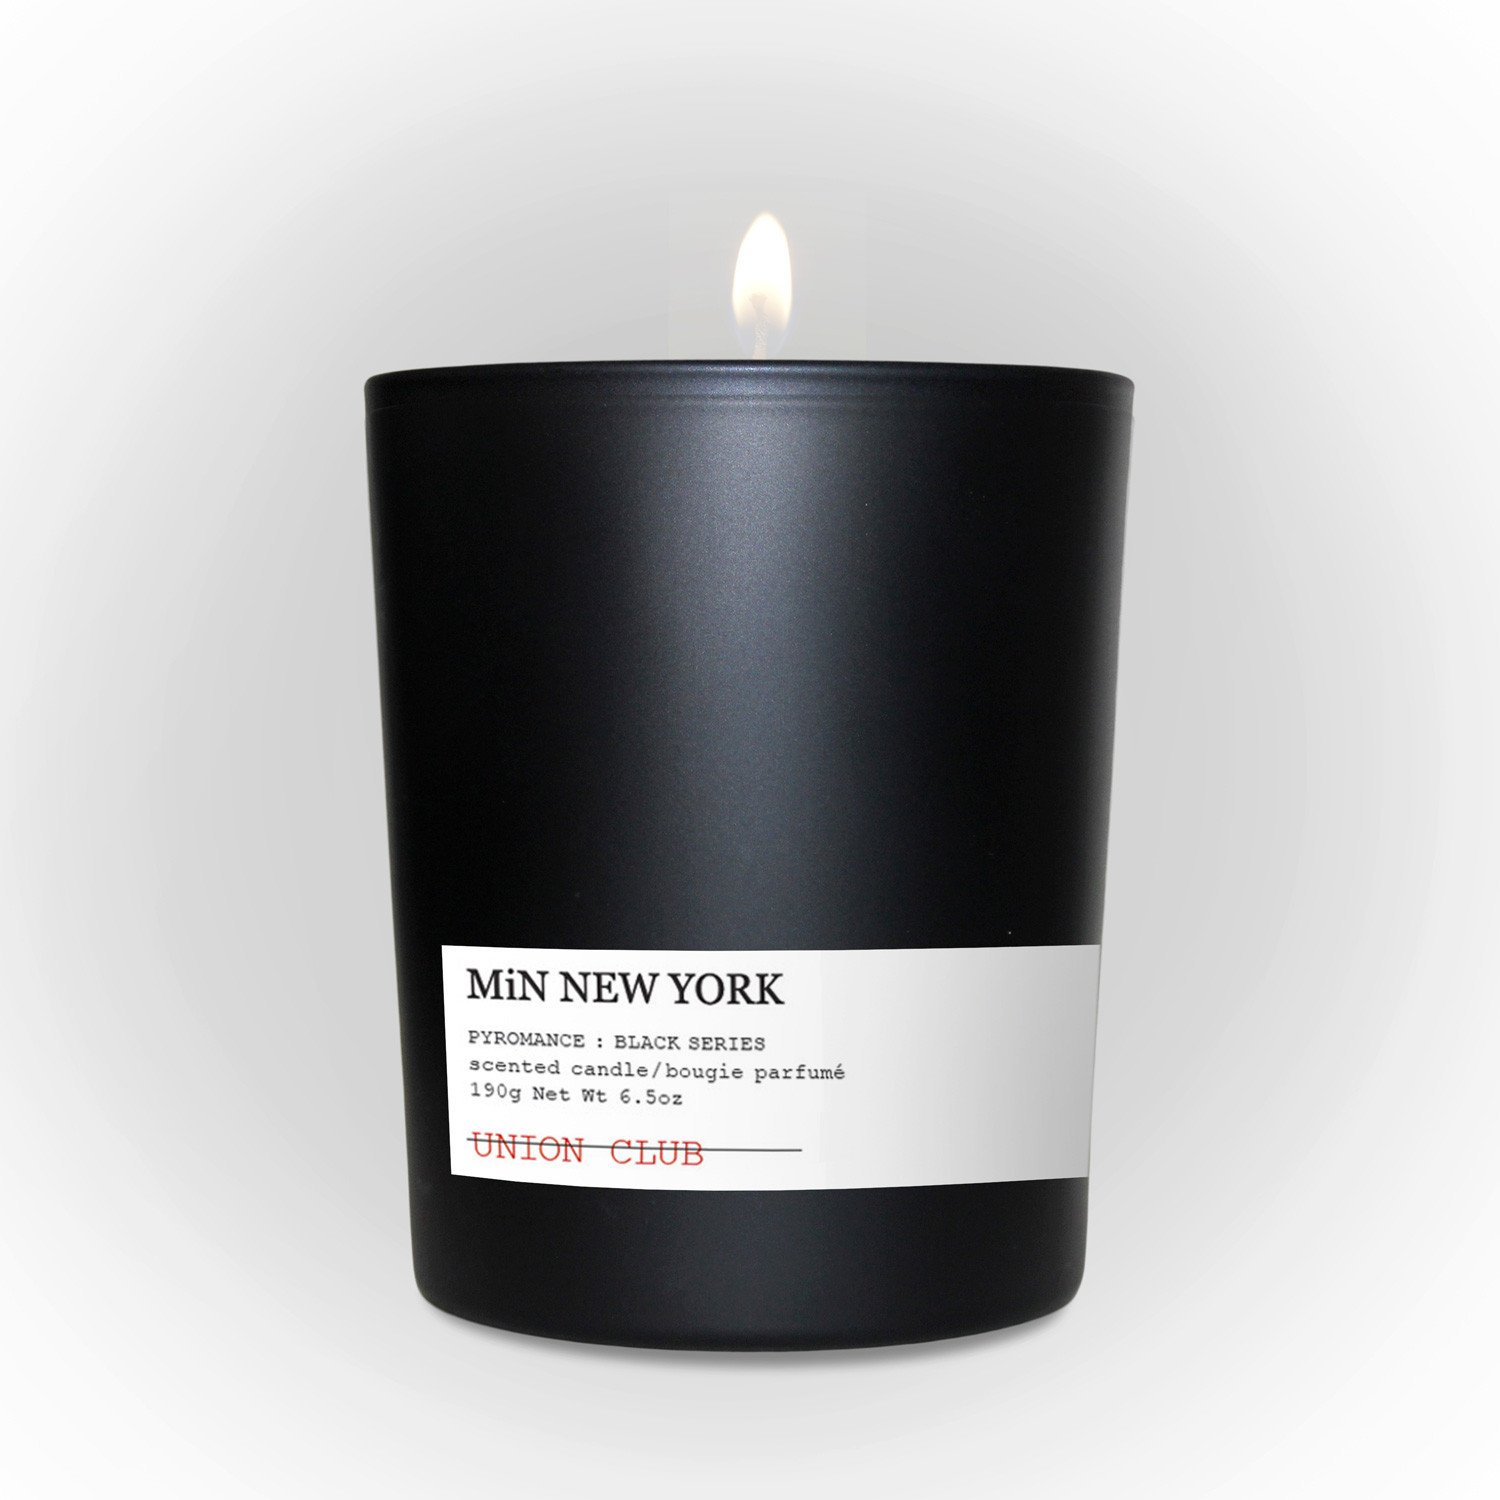 MiN New York Pyromance Black Series Union Club Candle Chad Murawczyk